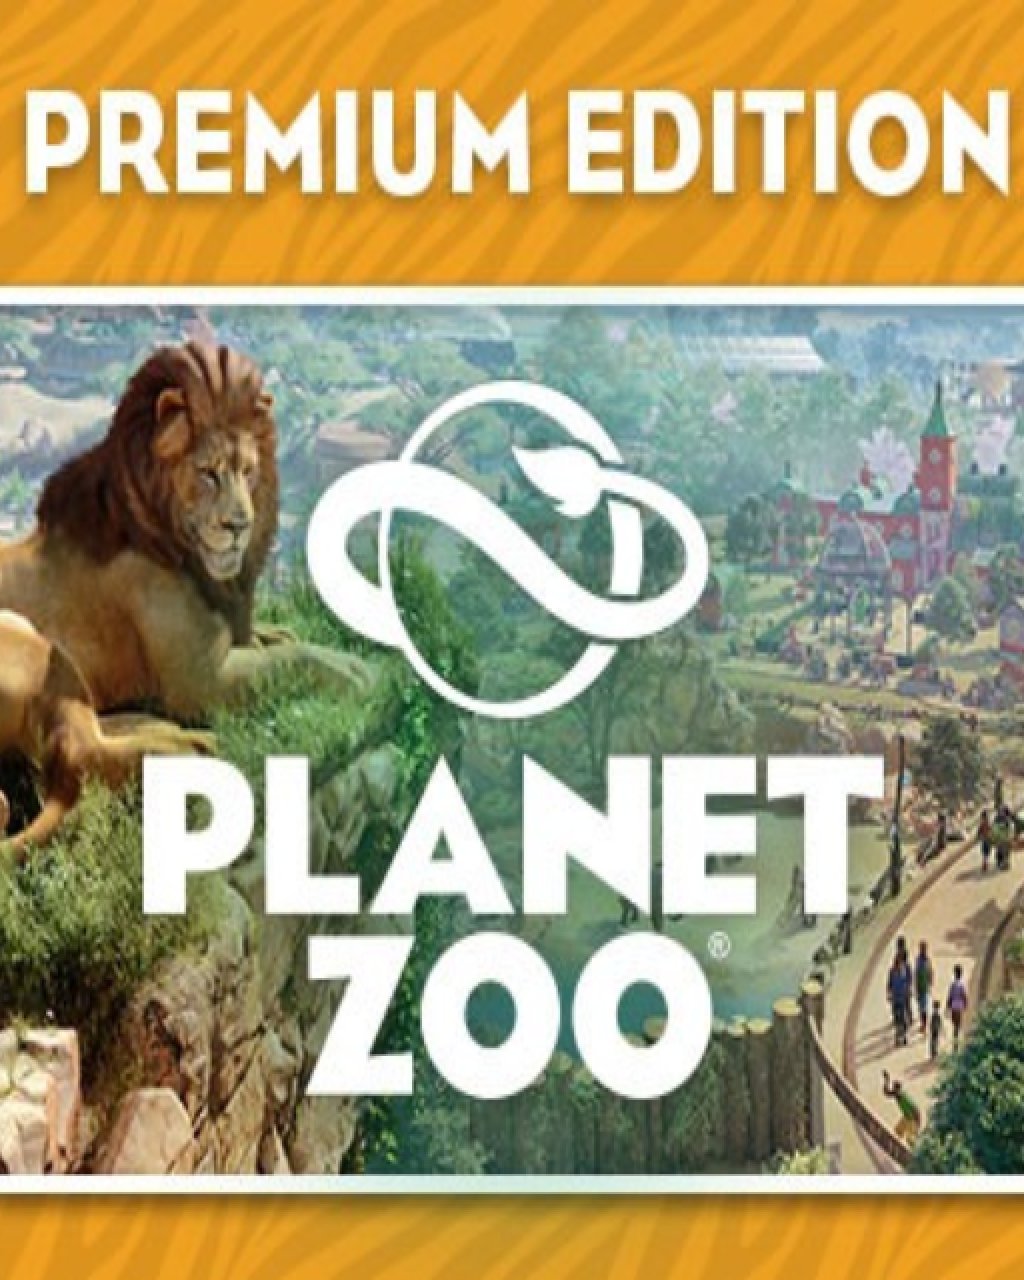 ESD Planet Zoo Premium Edition